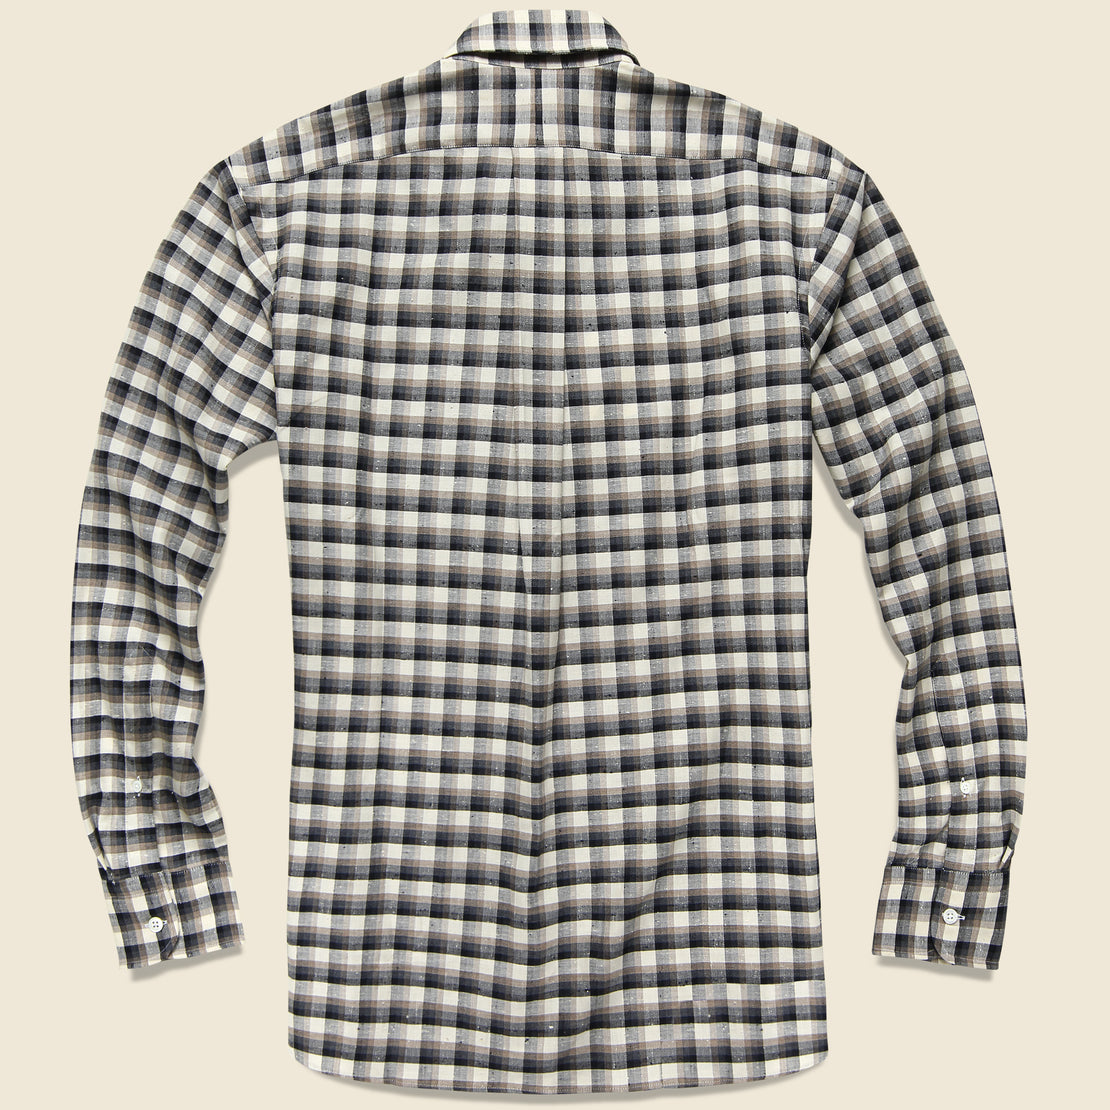 Twill Plaid Shirt - Brown/Cream - Hamilton Shirt Co. - STAG Provisions - Tops - L/S Woven - Plaid